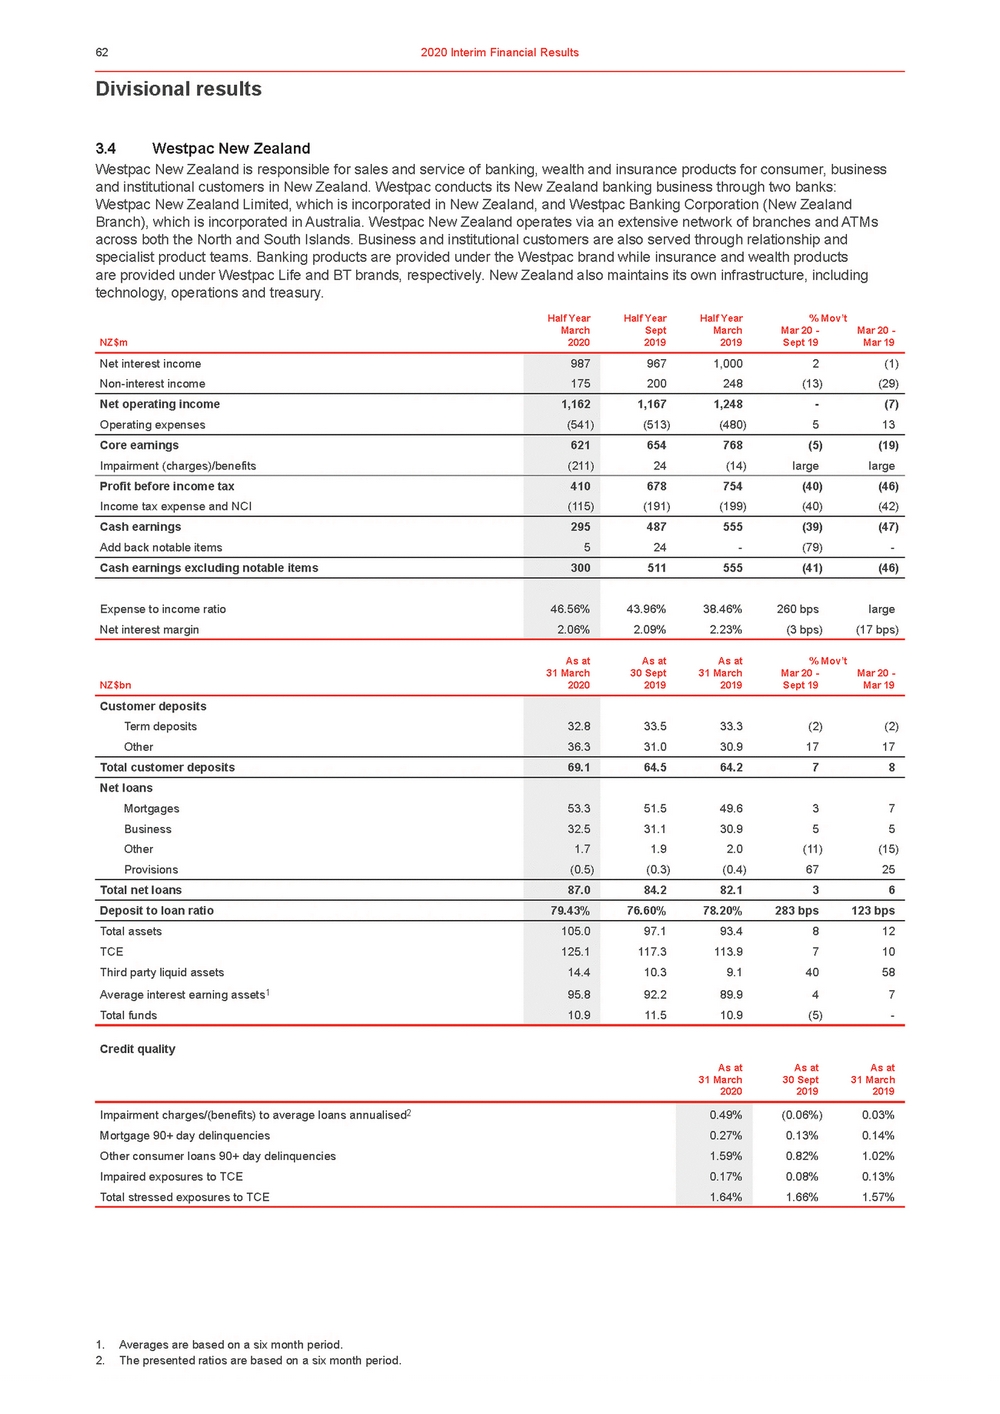 11676-3-ex1_westpac 2020 interim financial results announcement_page_067.jpg